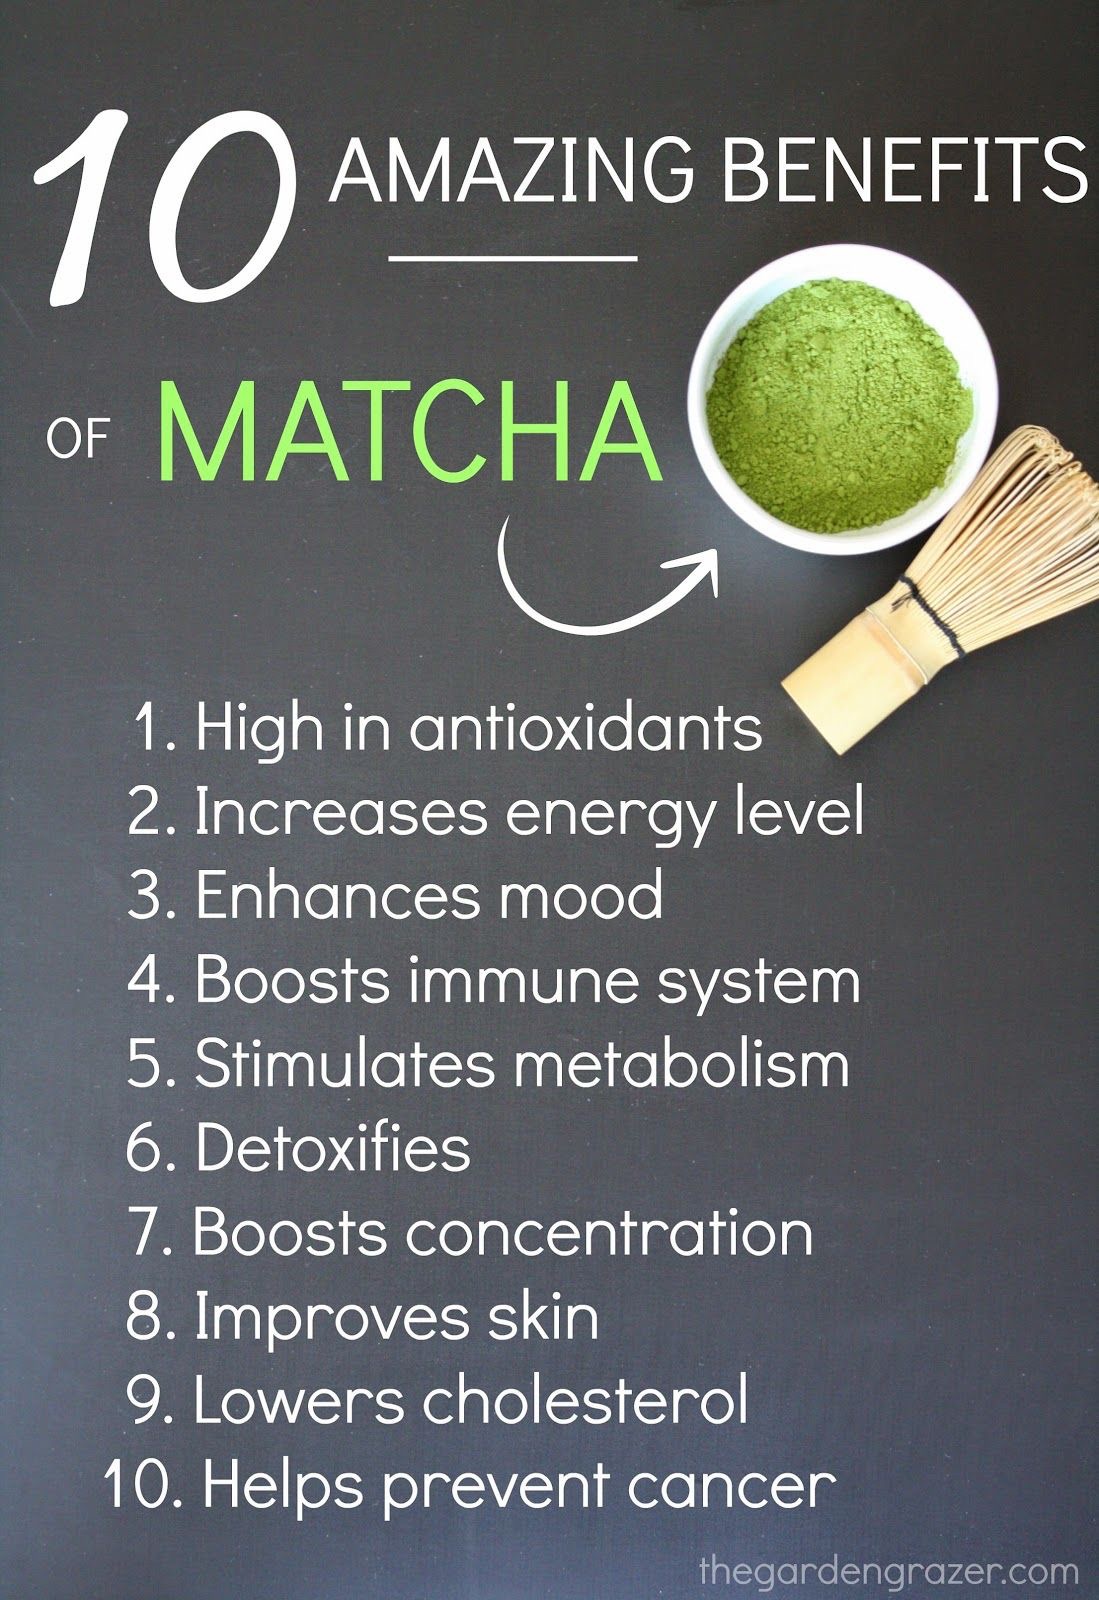 Green Zone. 10 Amazing Benefits of Matcha. Image credit: TheGardenGrazer.com